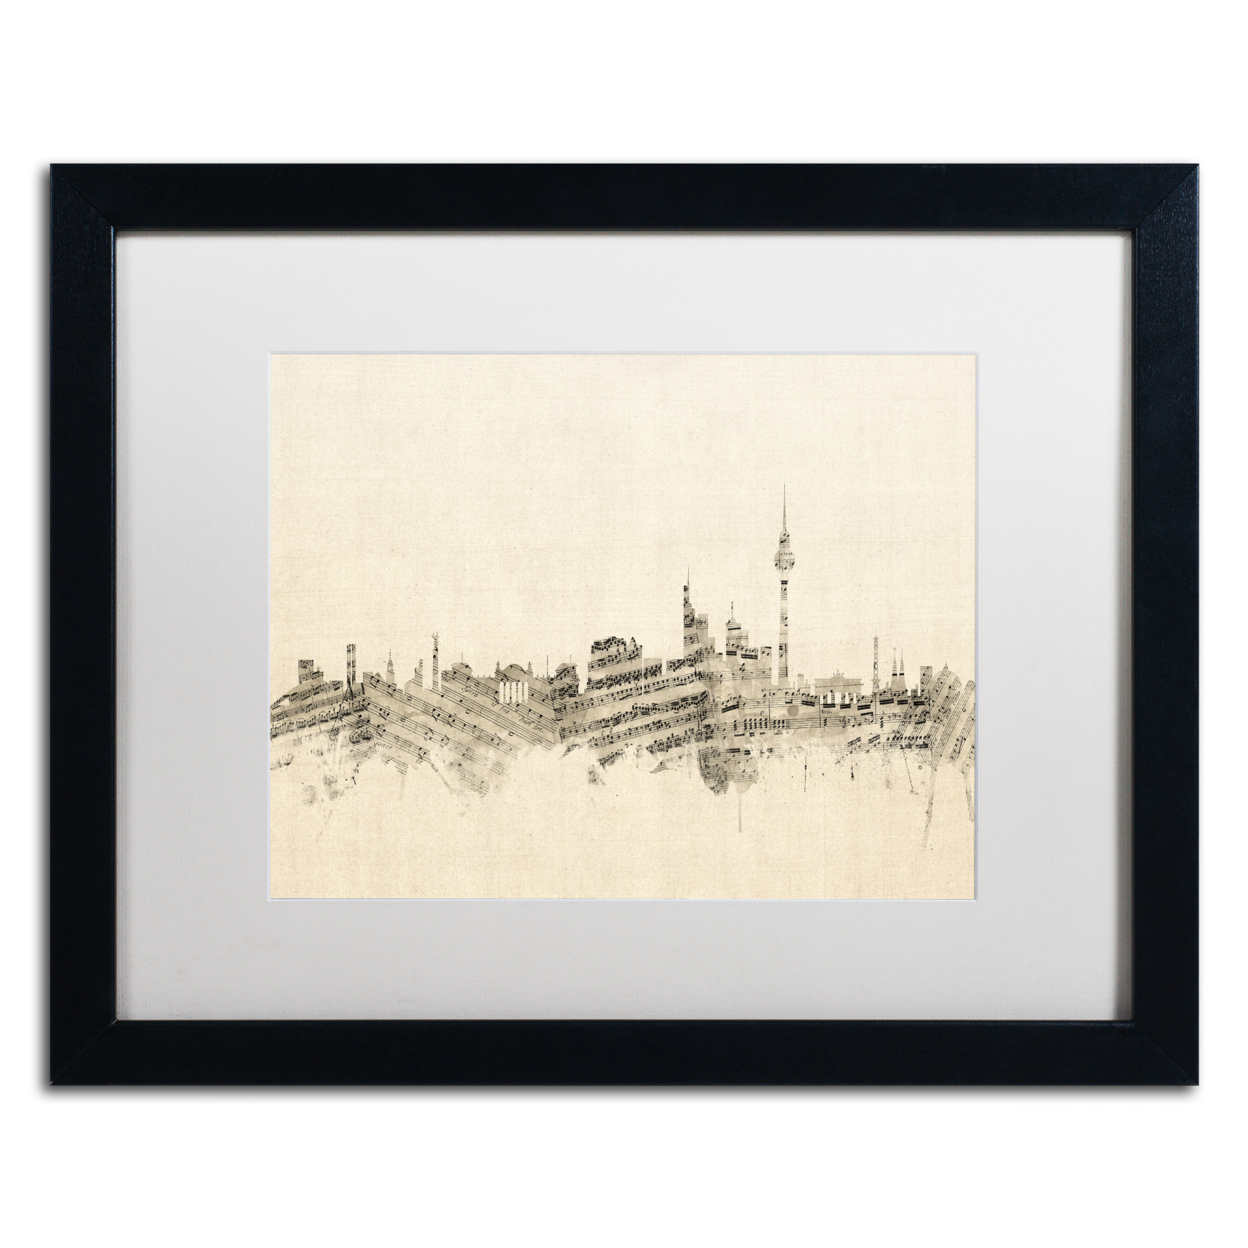 Michael Tompsett 'Berlin Skyline Sheet Music' Black Wooden Framed Art 18 X 22 Inches